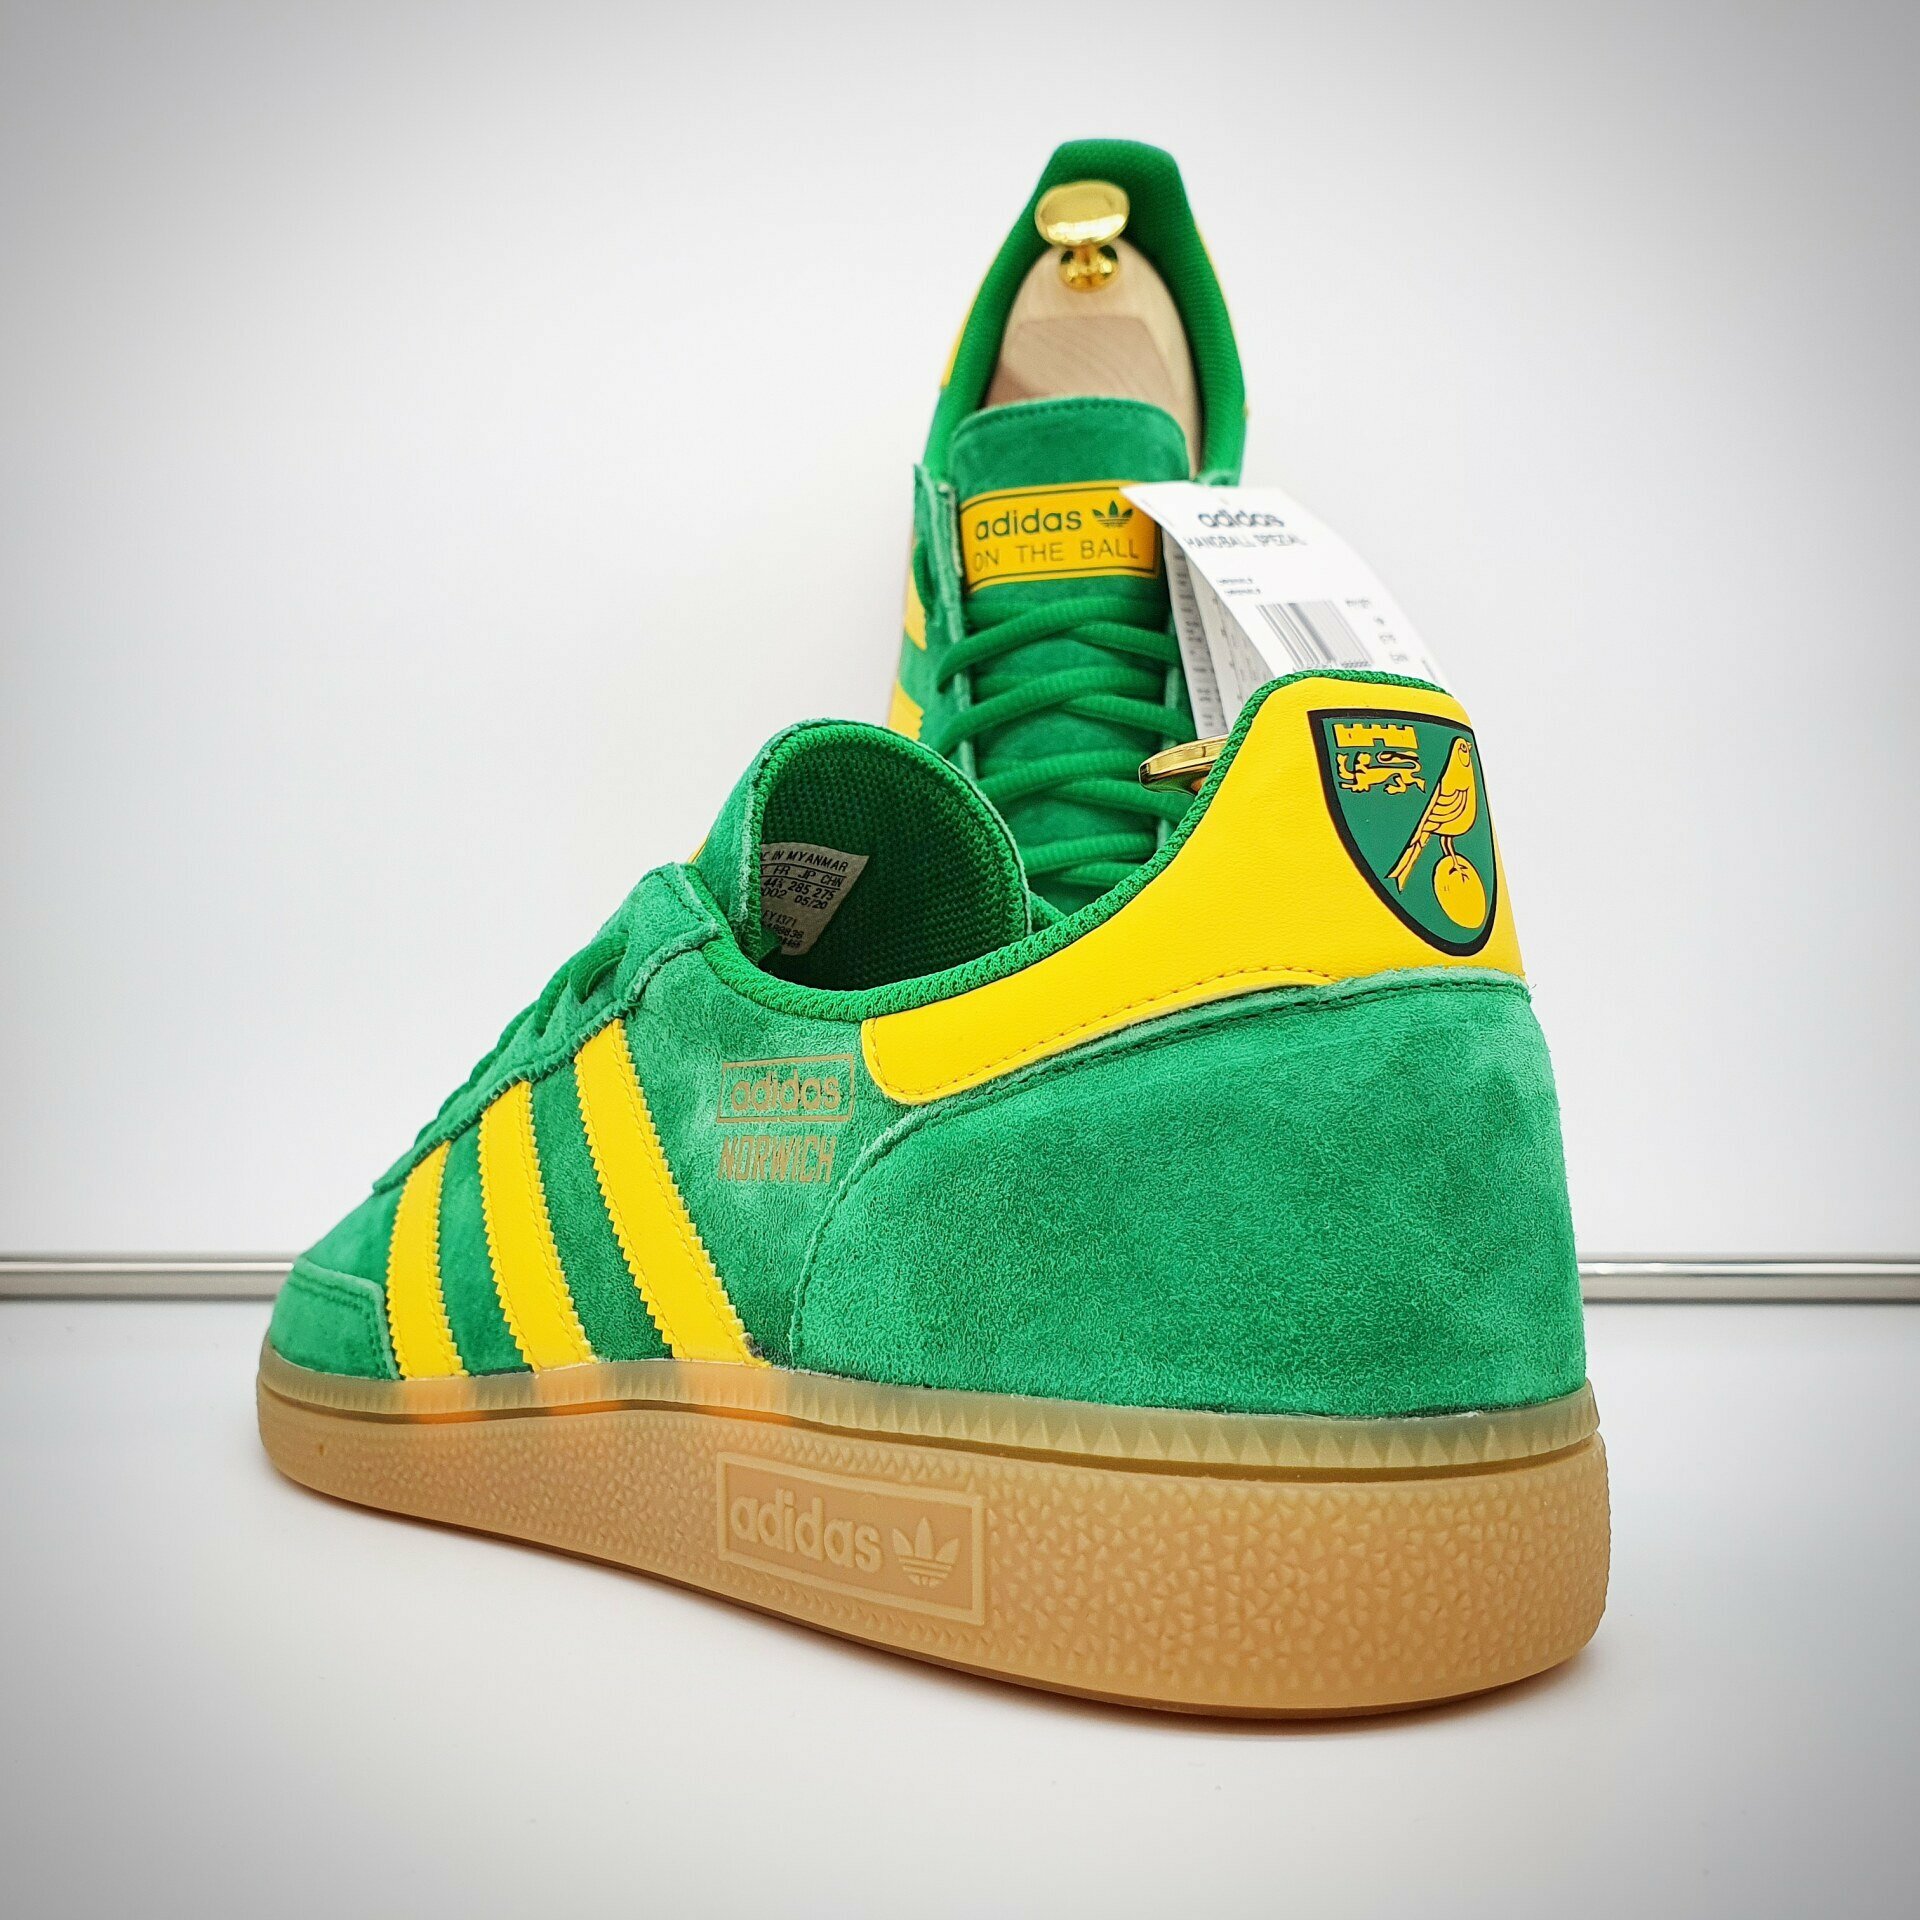 Norwich - adidas custom - Handball Spezial green